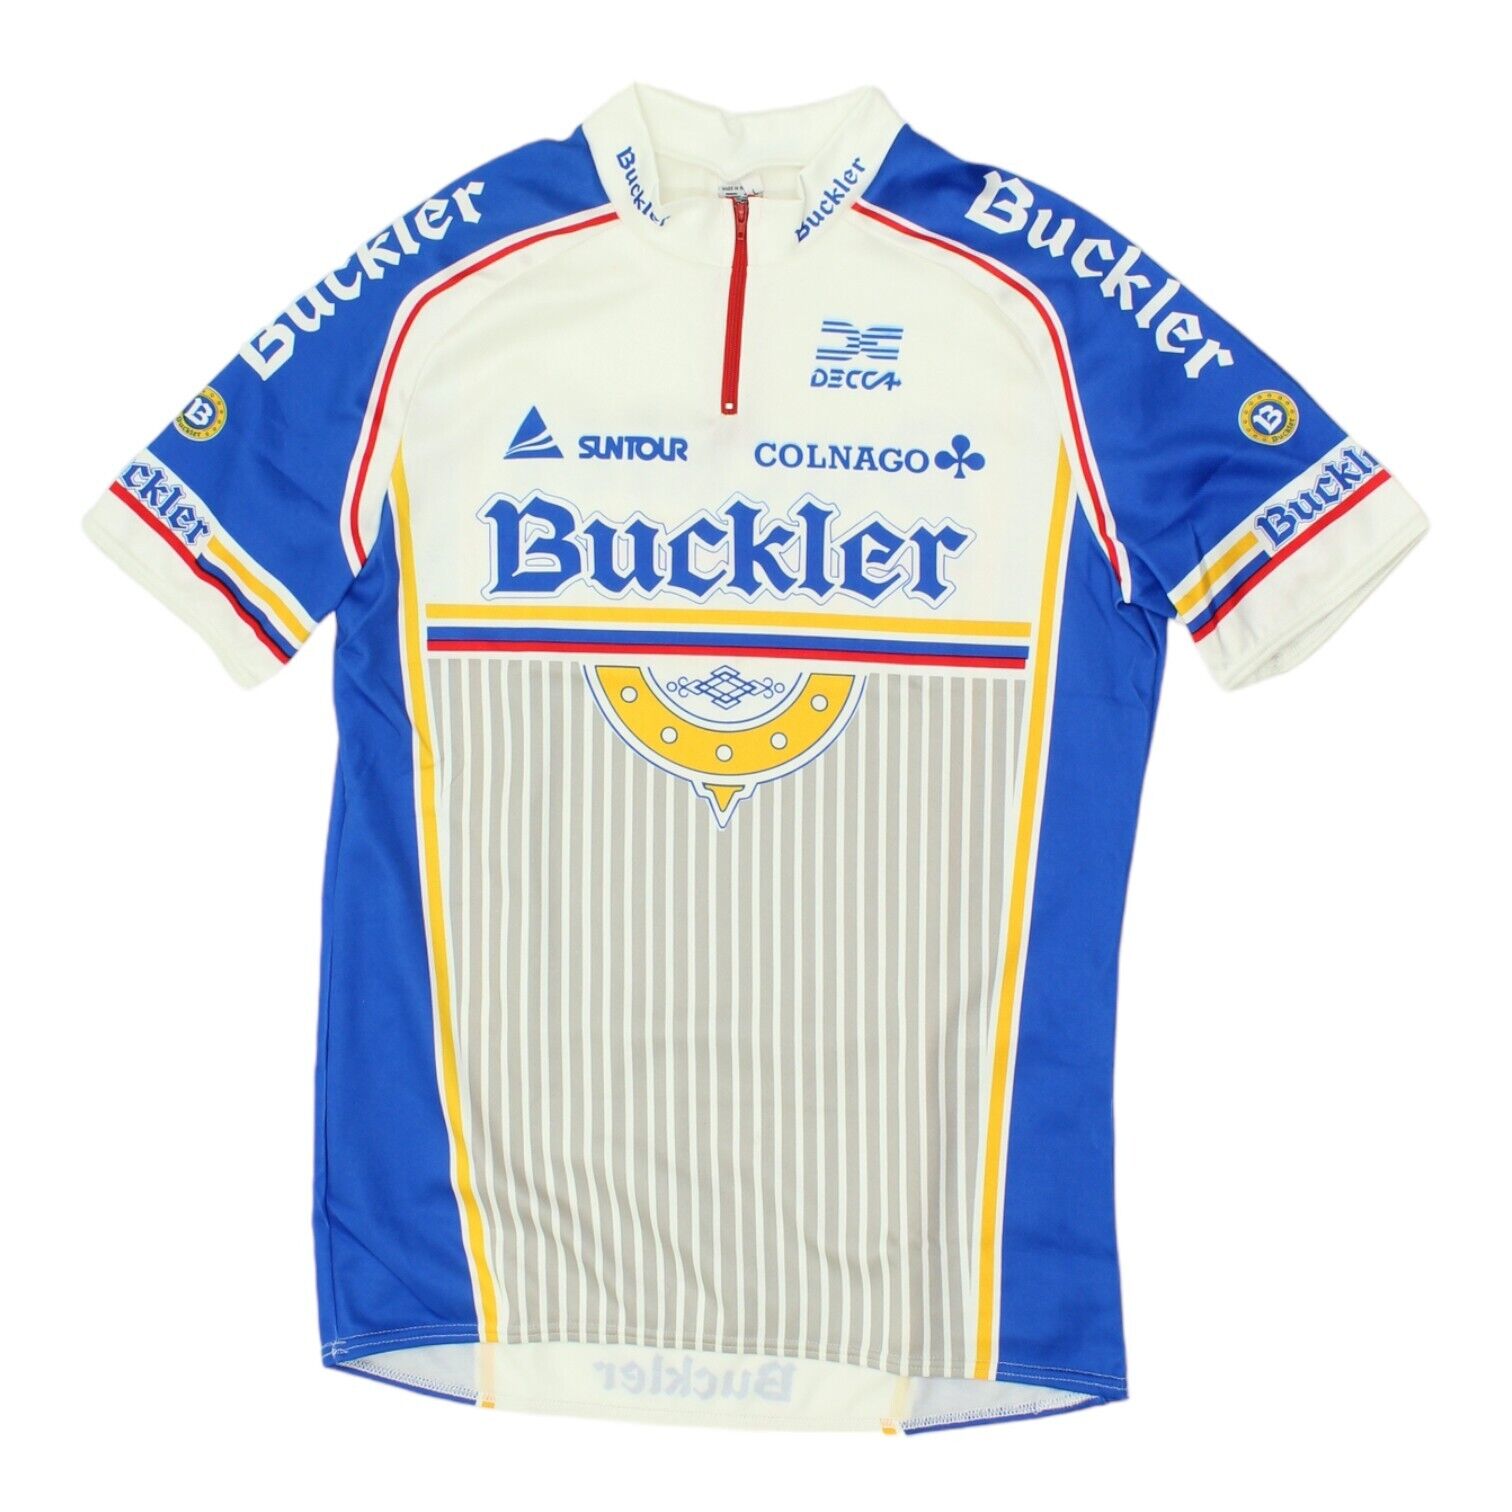 Buckler Decca Colnago Mens White Blue Cycling Jersey | Vintage Biking Sportswear